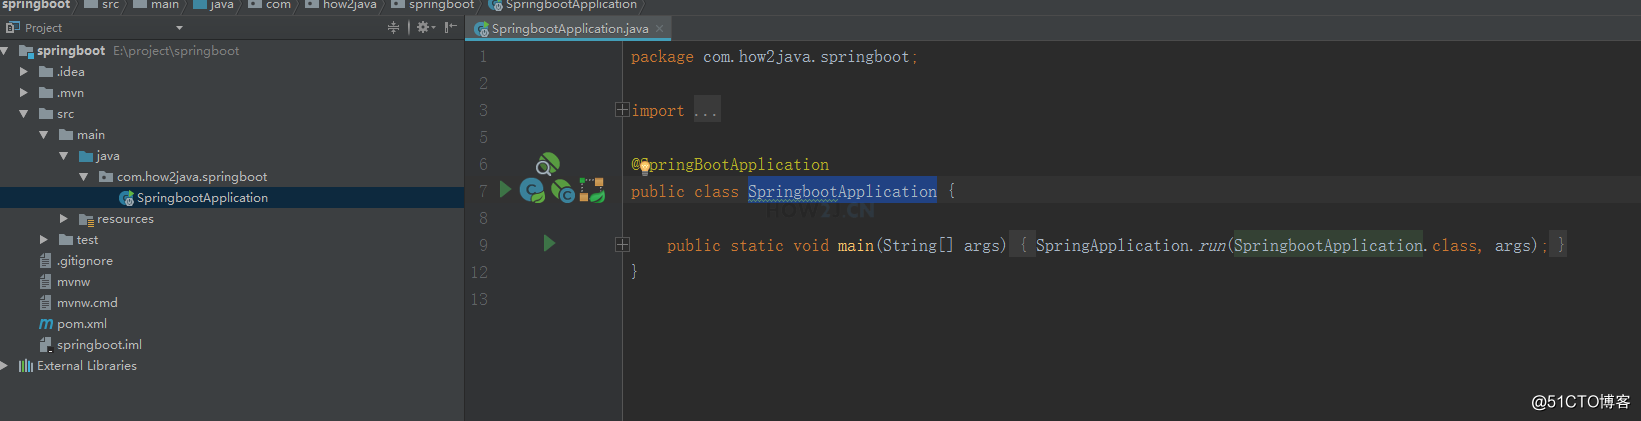 SpringbootApplication.java